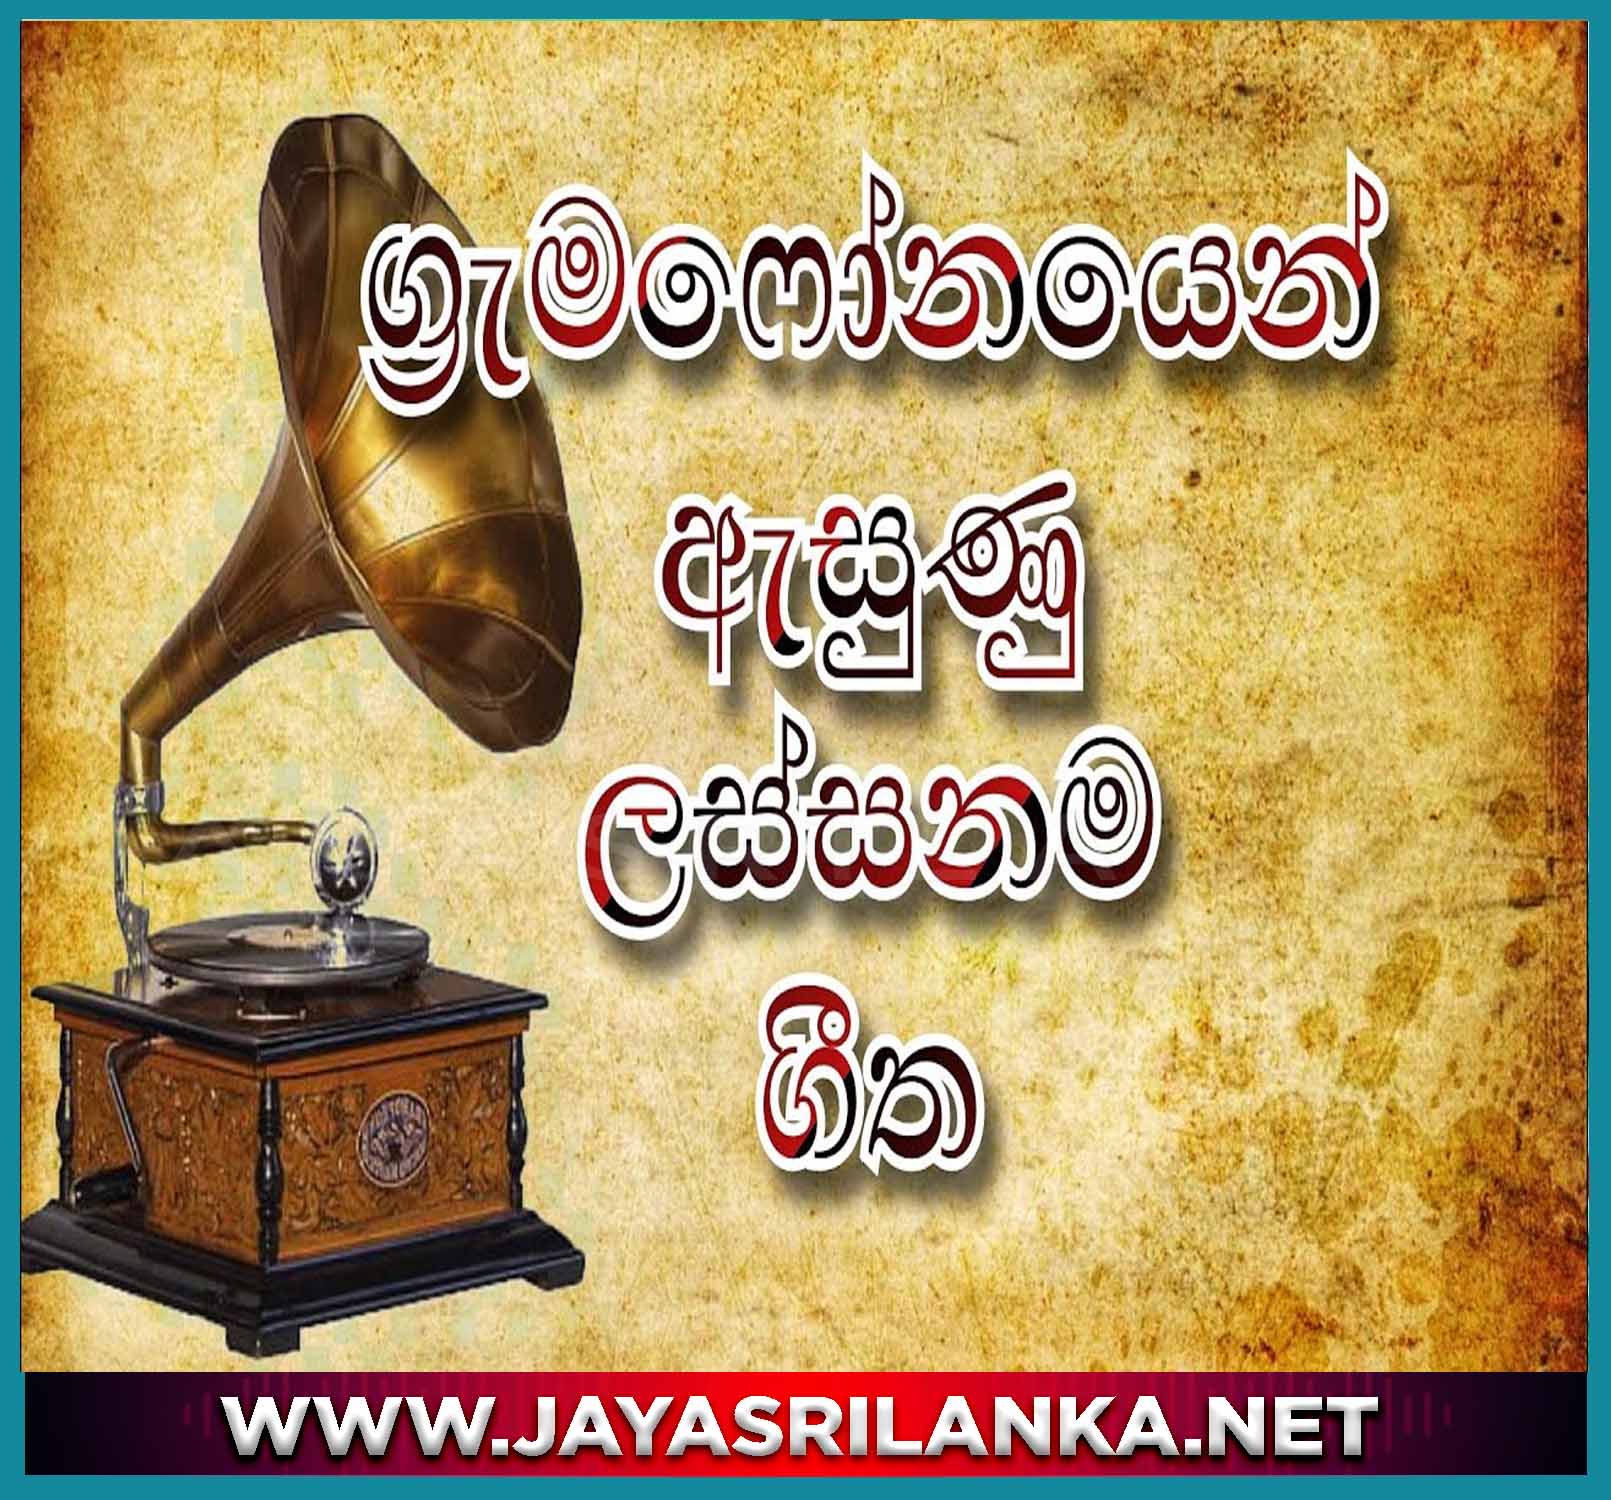 Aiyata Me Raja Ge - Gramophone Songs mp3 Image